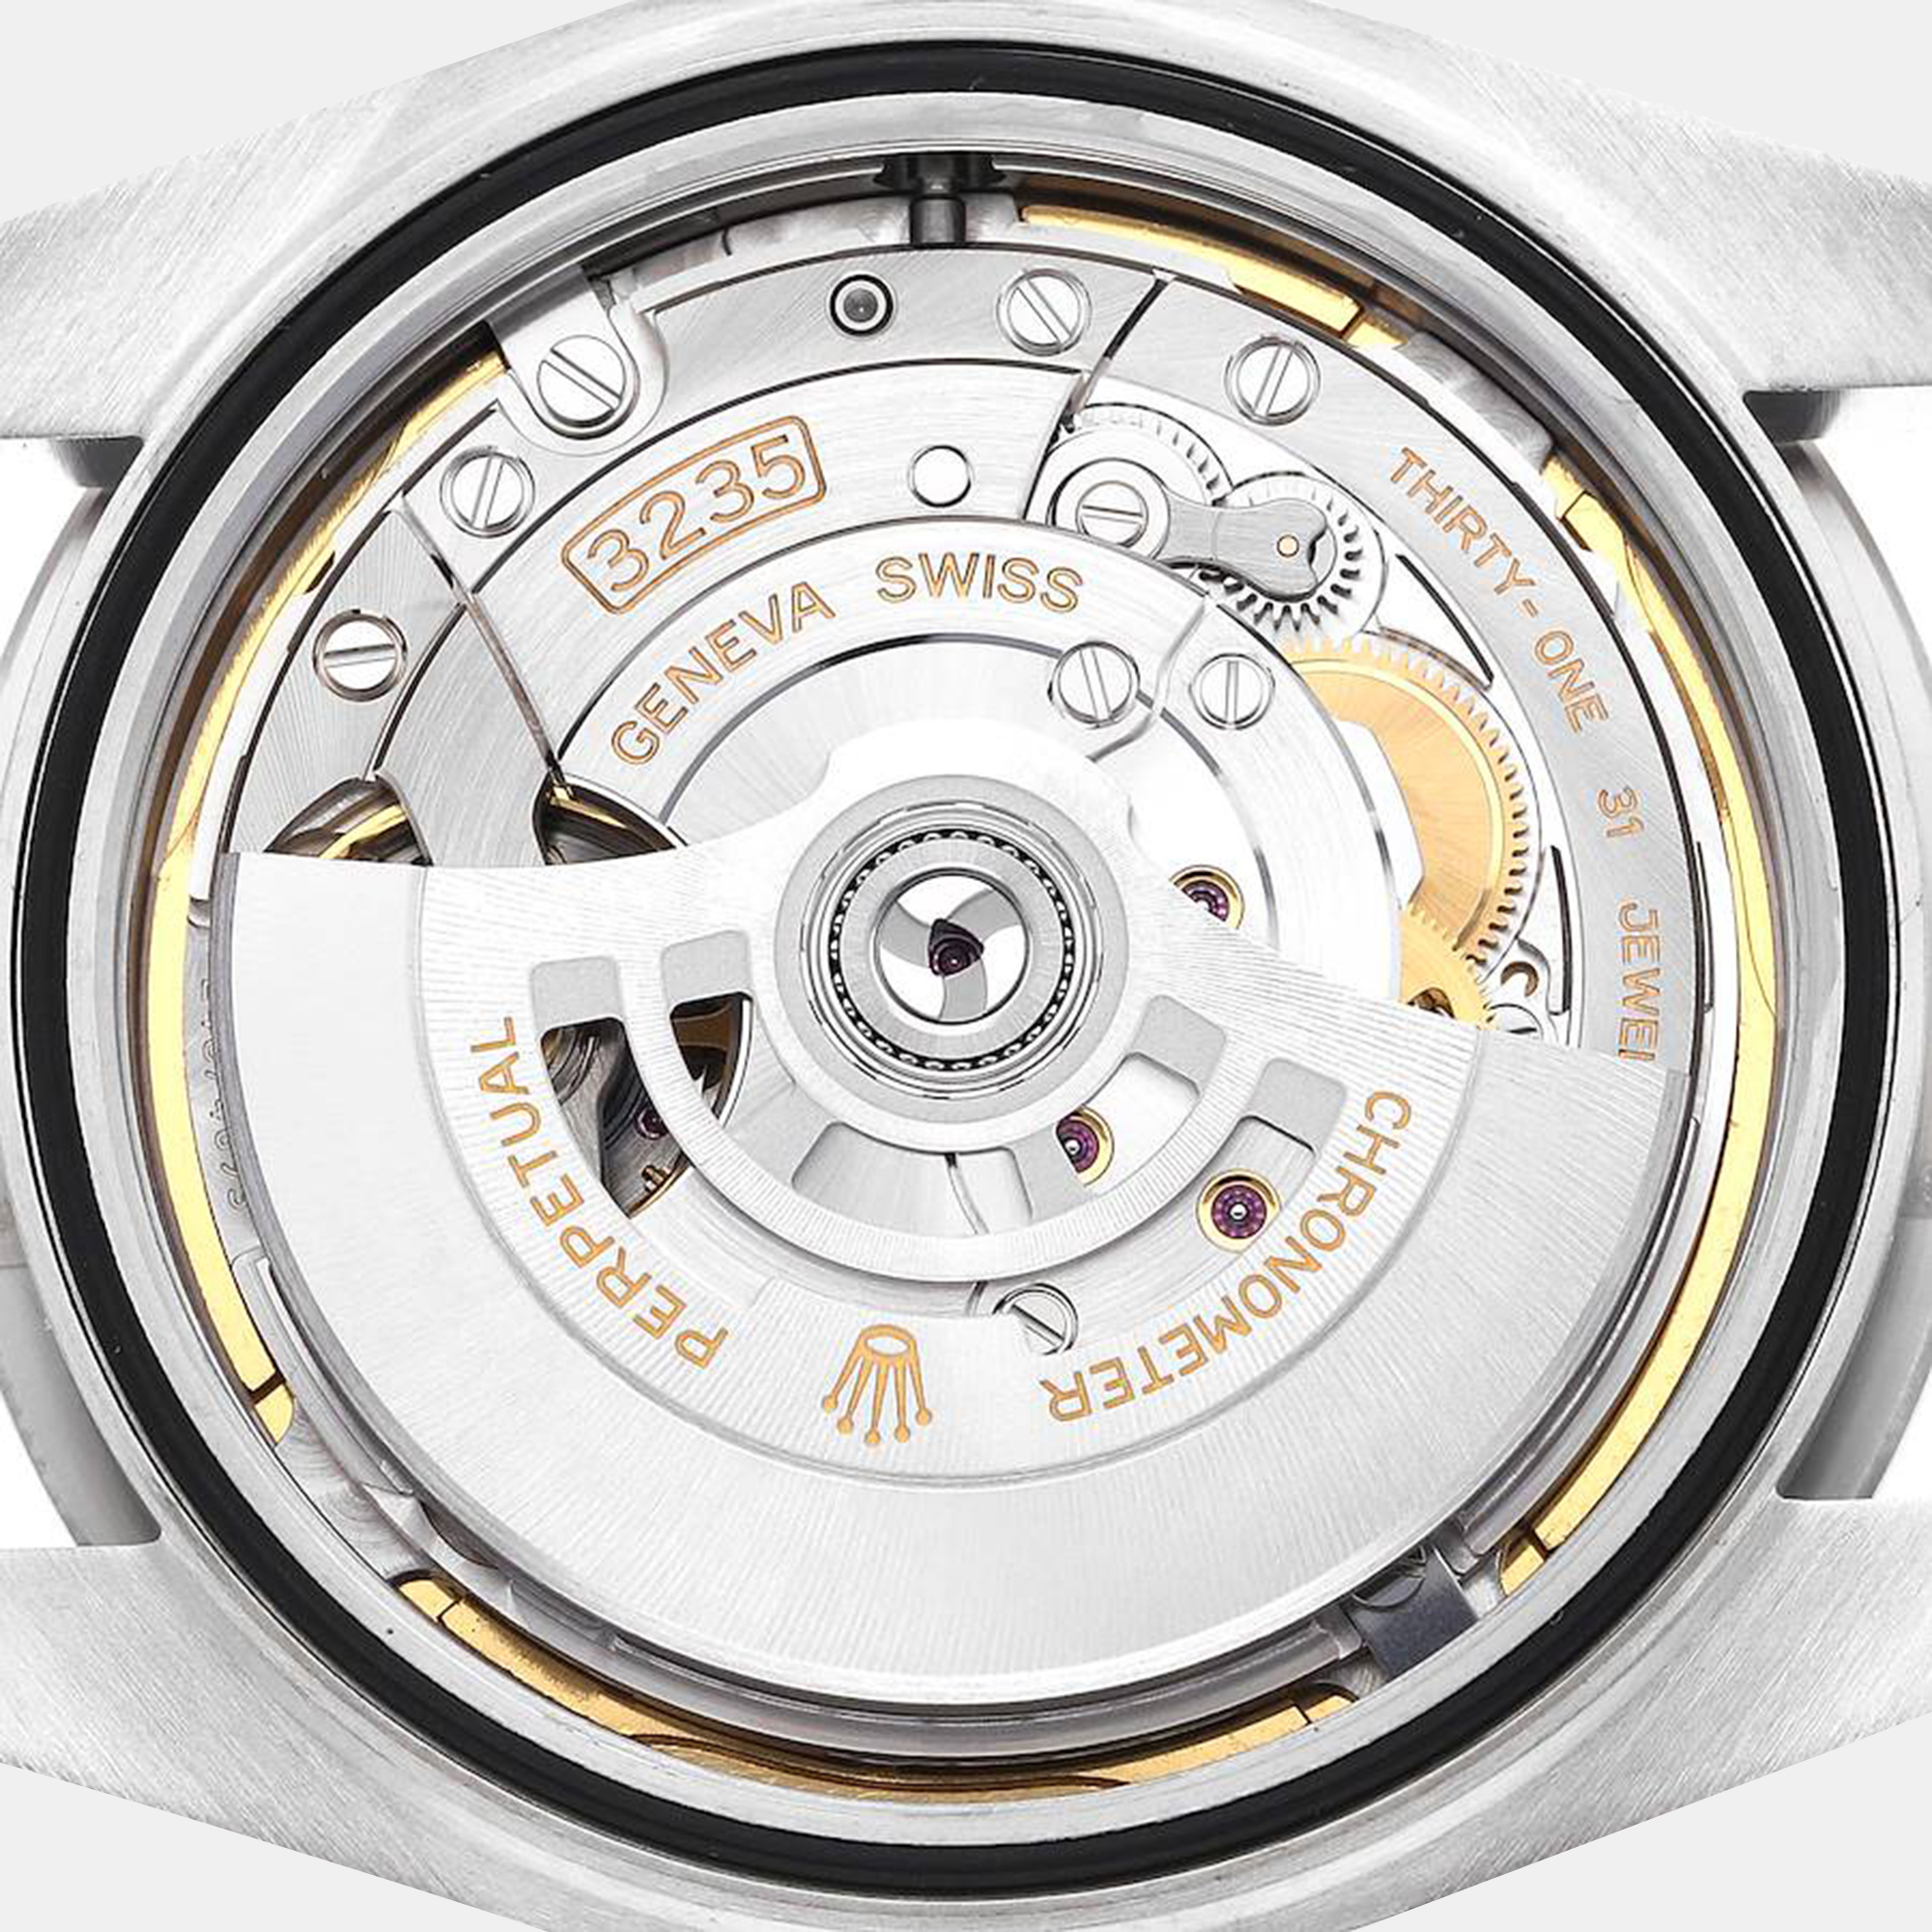 Rolex Datejust Steel White Gold Blue Dial Men's Watch 126334 41 Mm